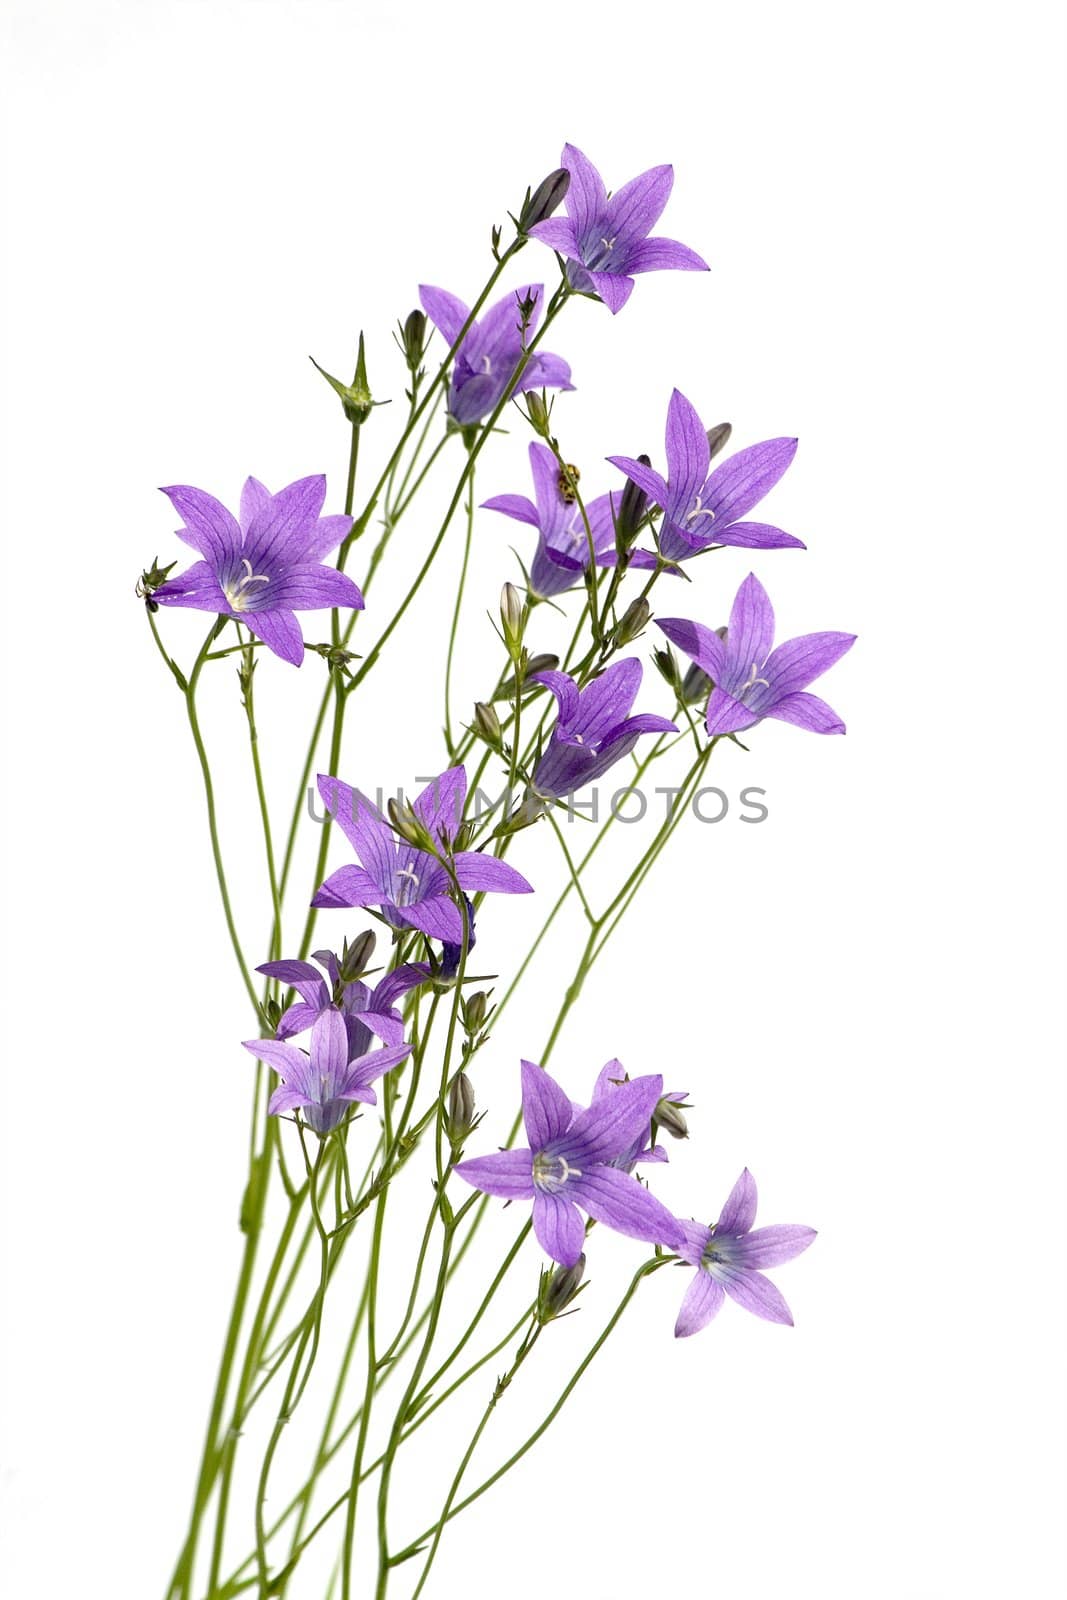 Bell-flowers by vvvera